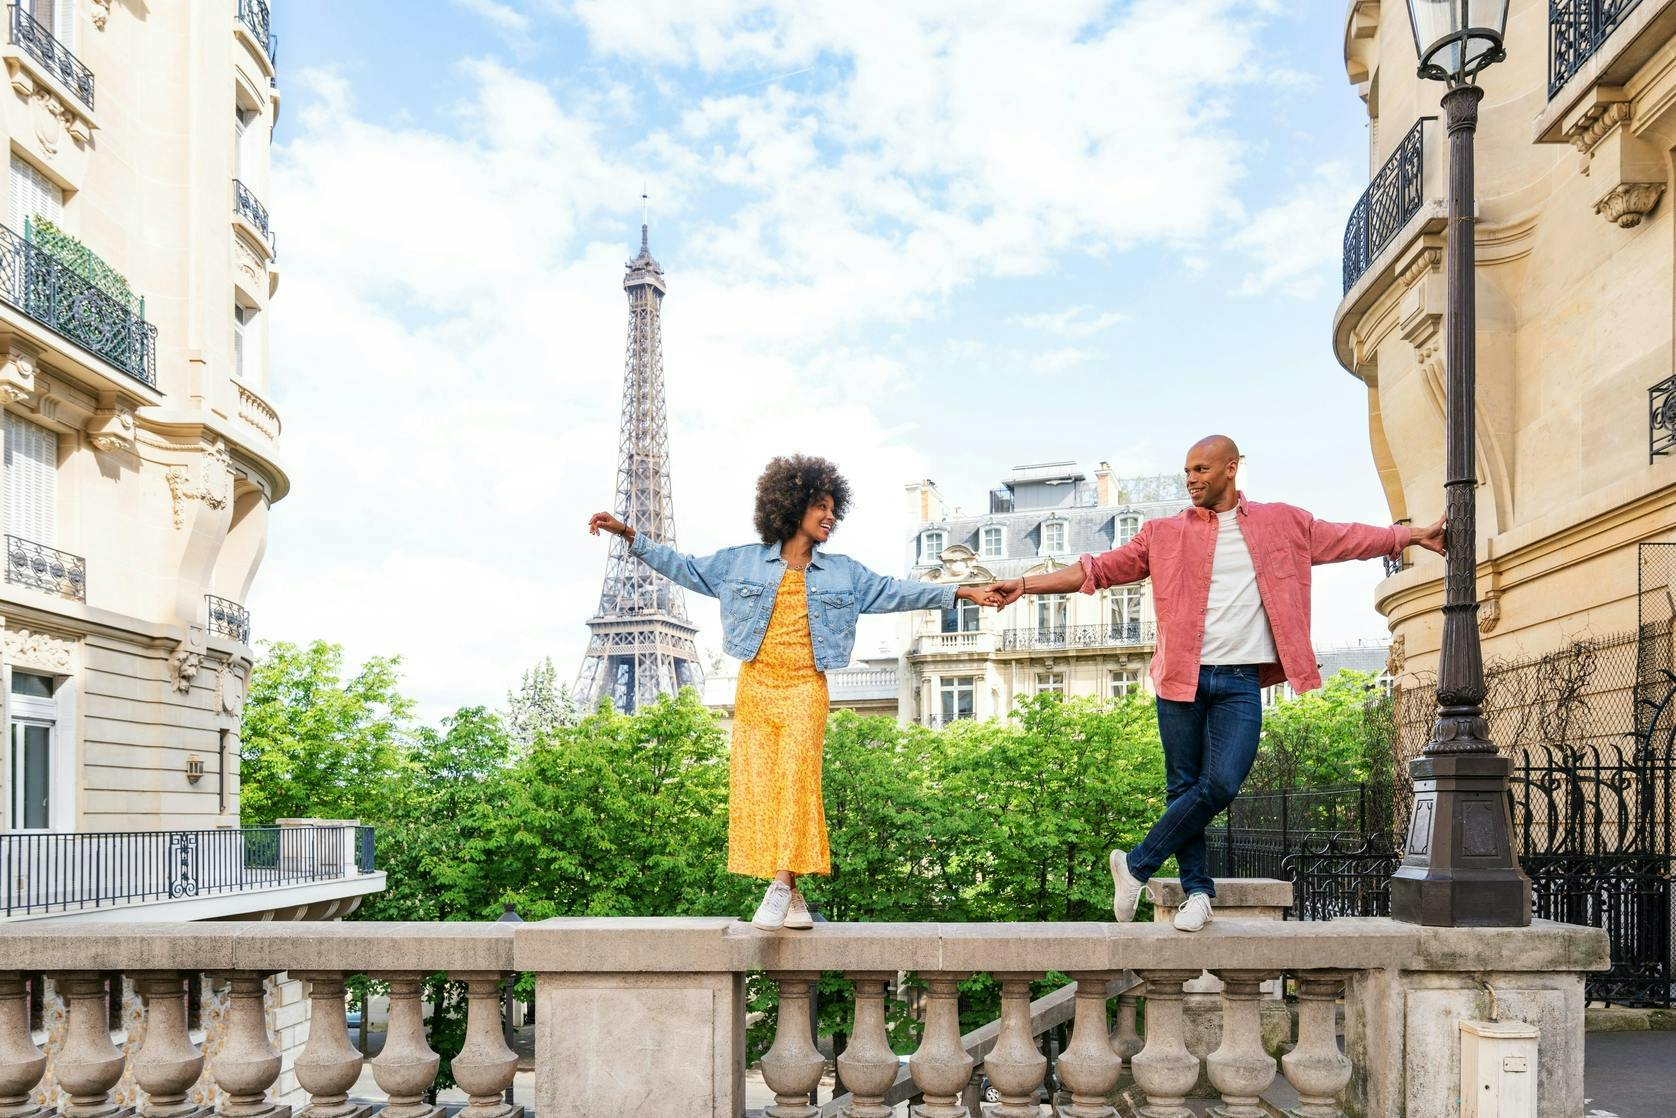 Fotoshooting mit dem Eiffelturm in Paris